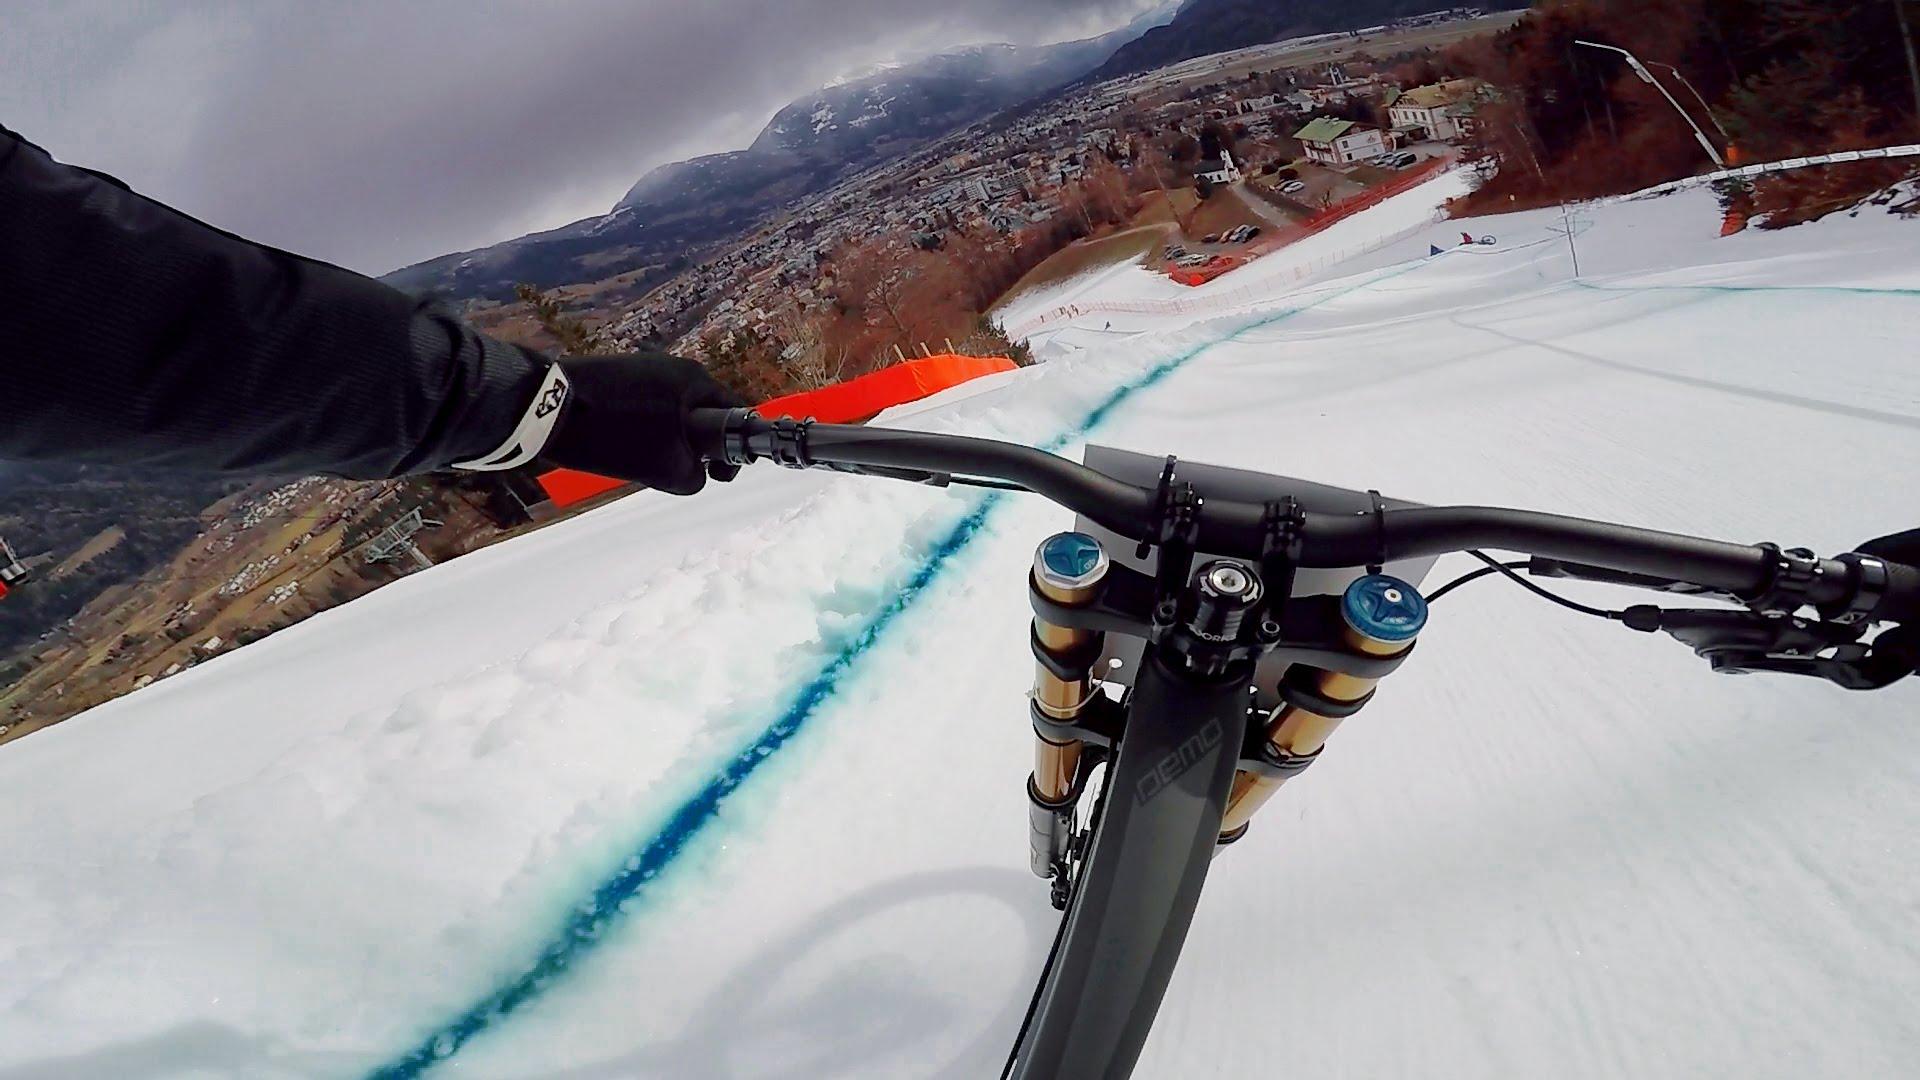 Downhill Racing On Snow  Ride Hard On Snow 2016